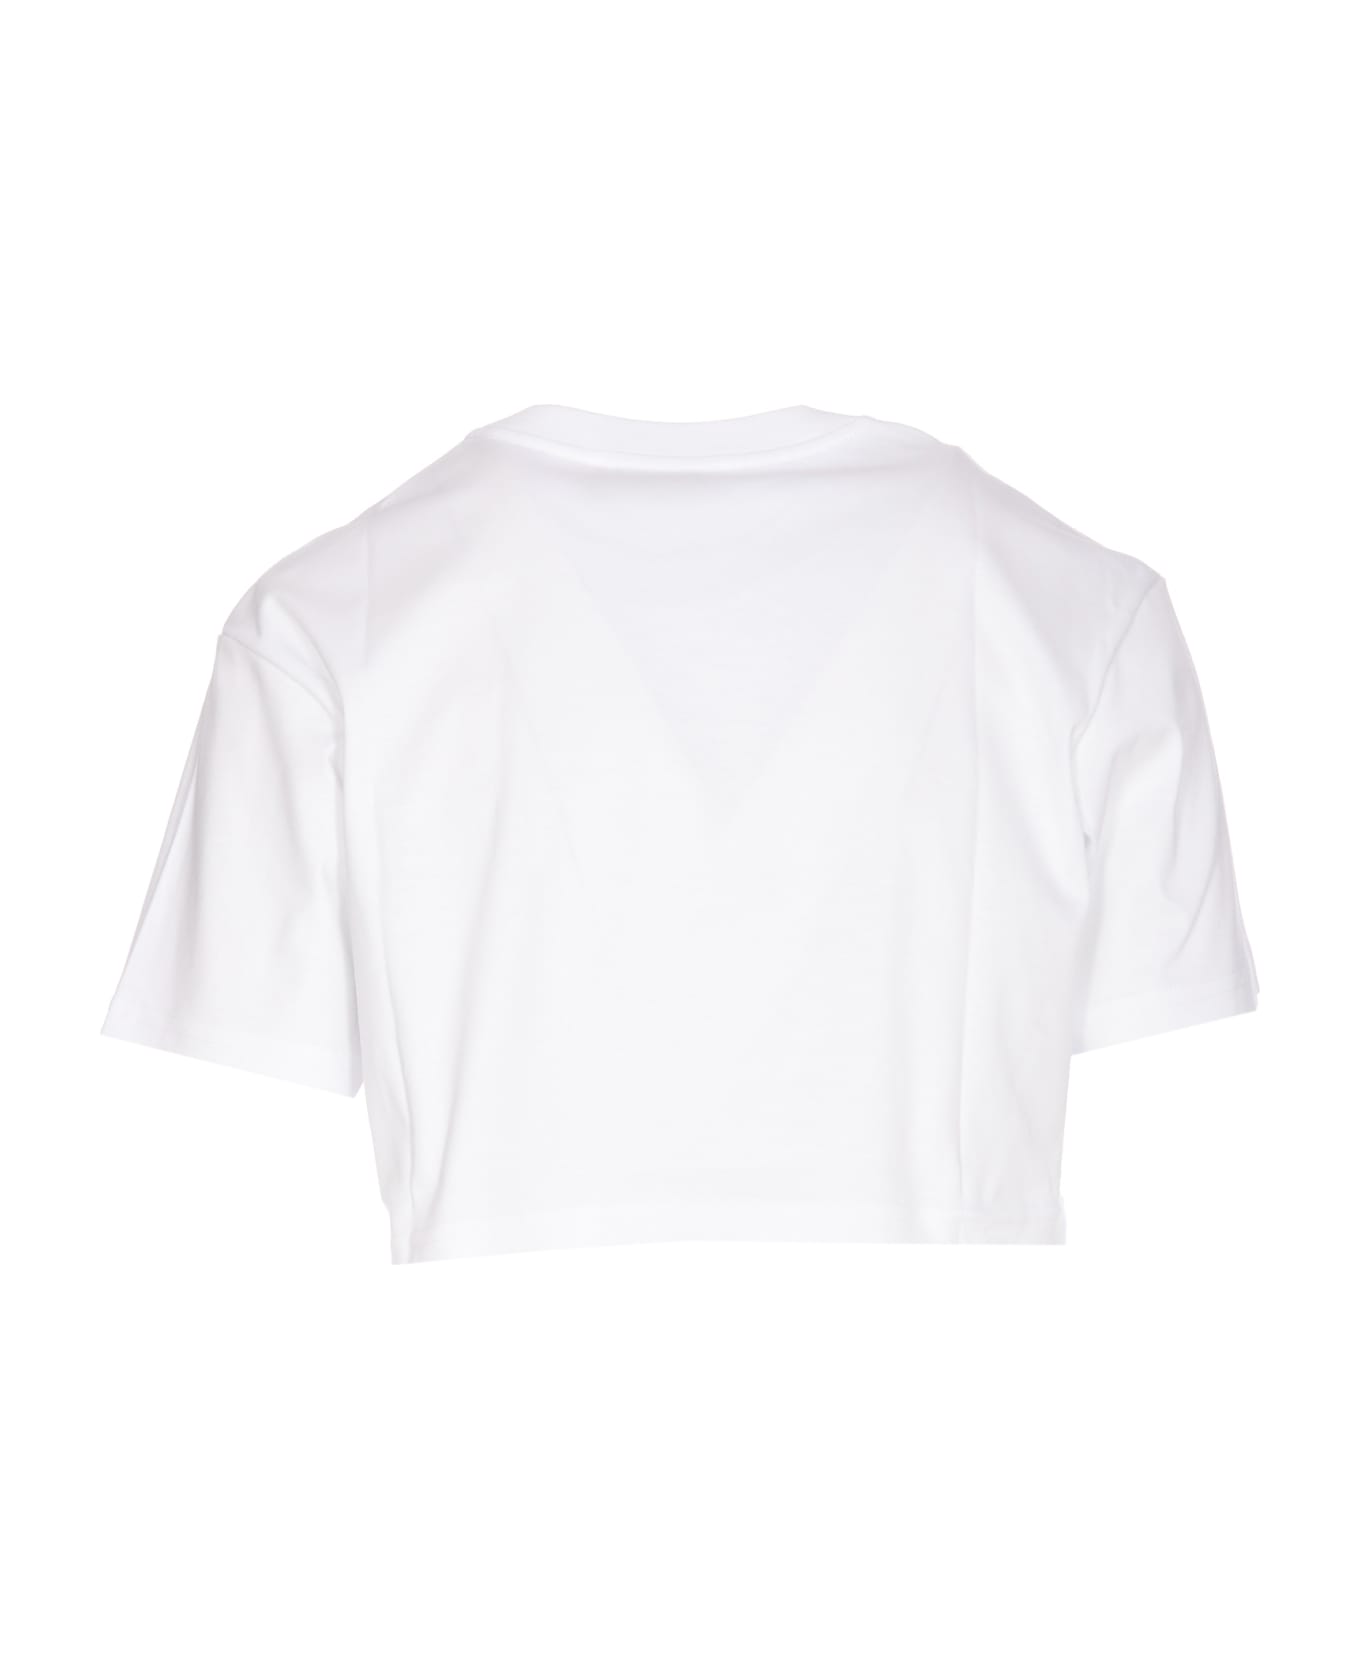 Lanvin Cropped Logo Lanvin Paris T-shirt - Optic white Tシャツ